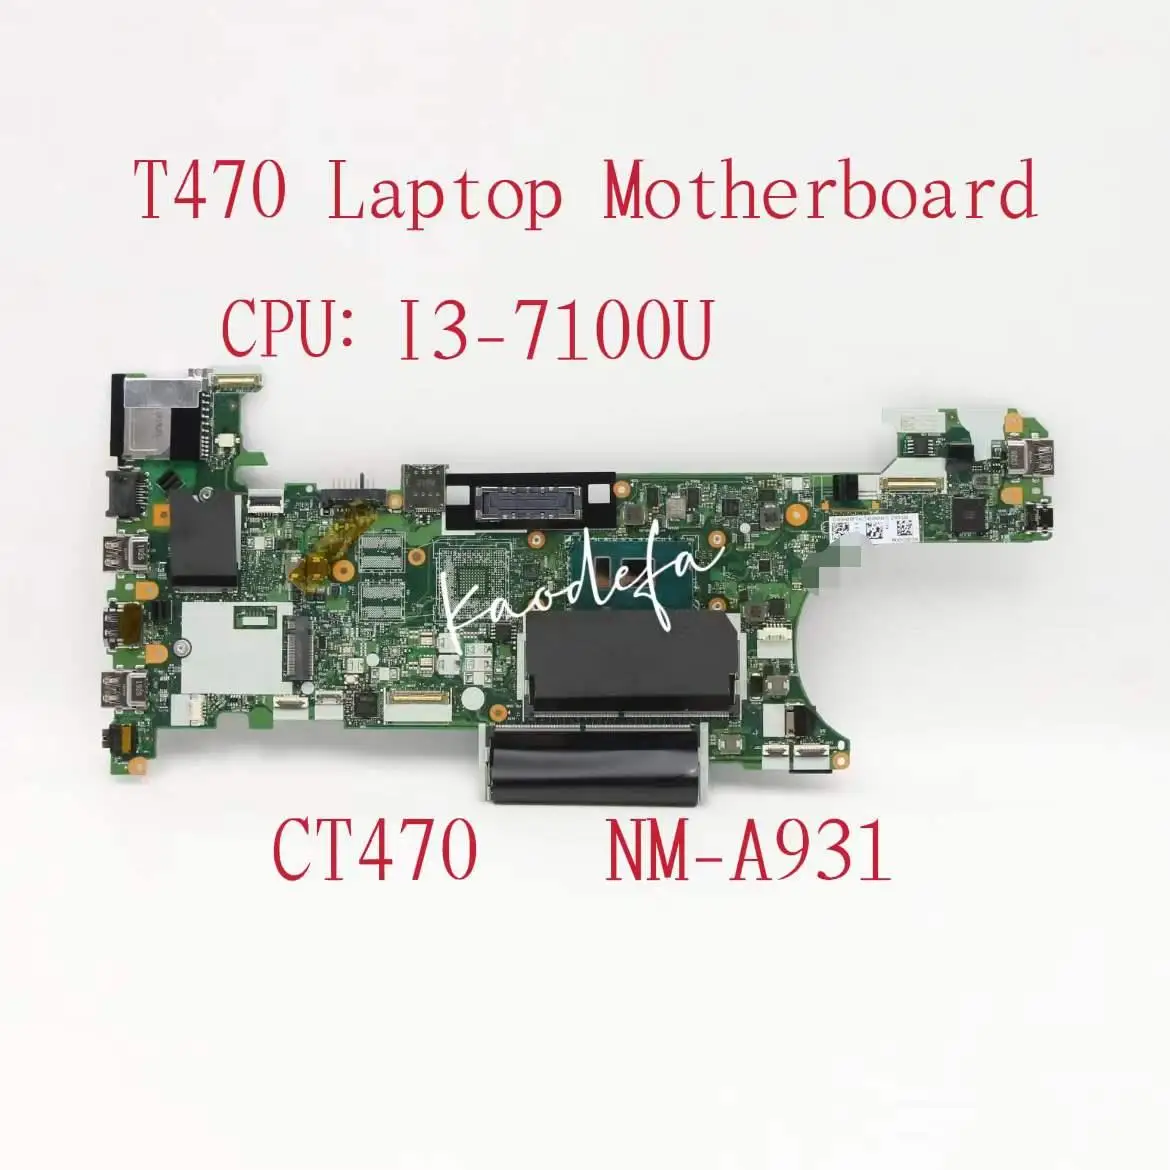 

NM-A931 For Lenovo Thinkpad T470 Laptop Motherboard CPU:I3-7100U FRU:01HX633 01LV667 01AX962 01LV669 01HX634 01LV670 01HX635